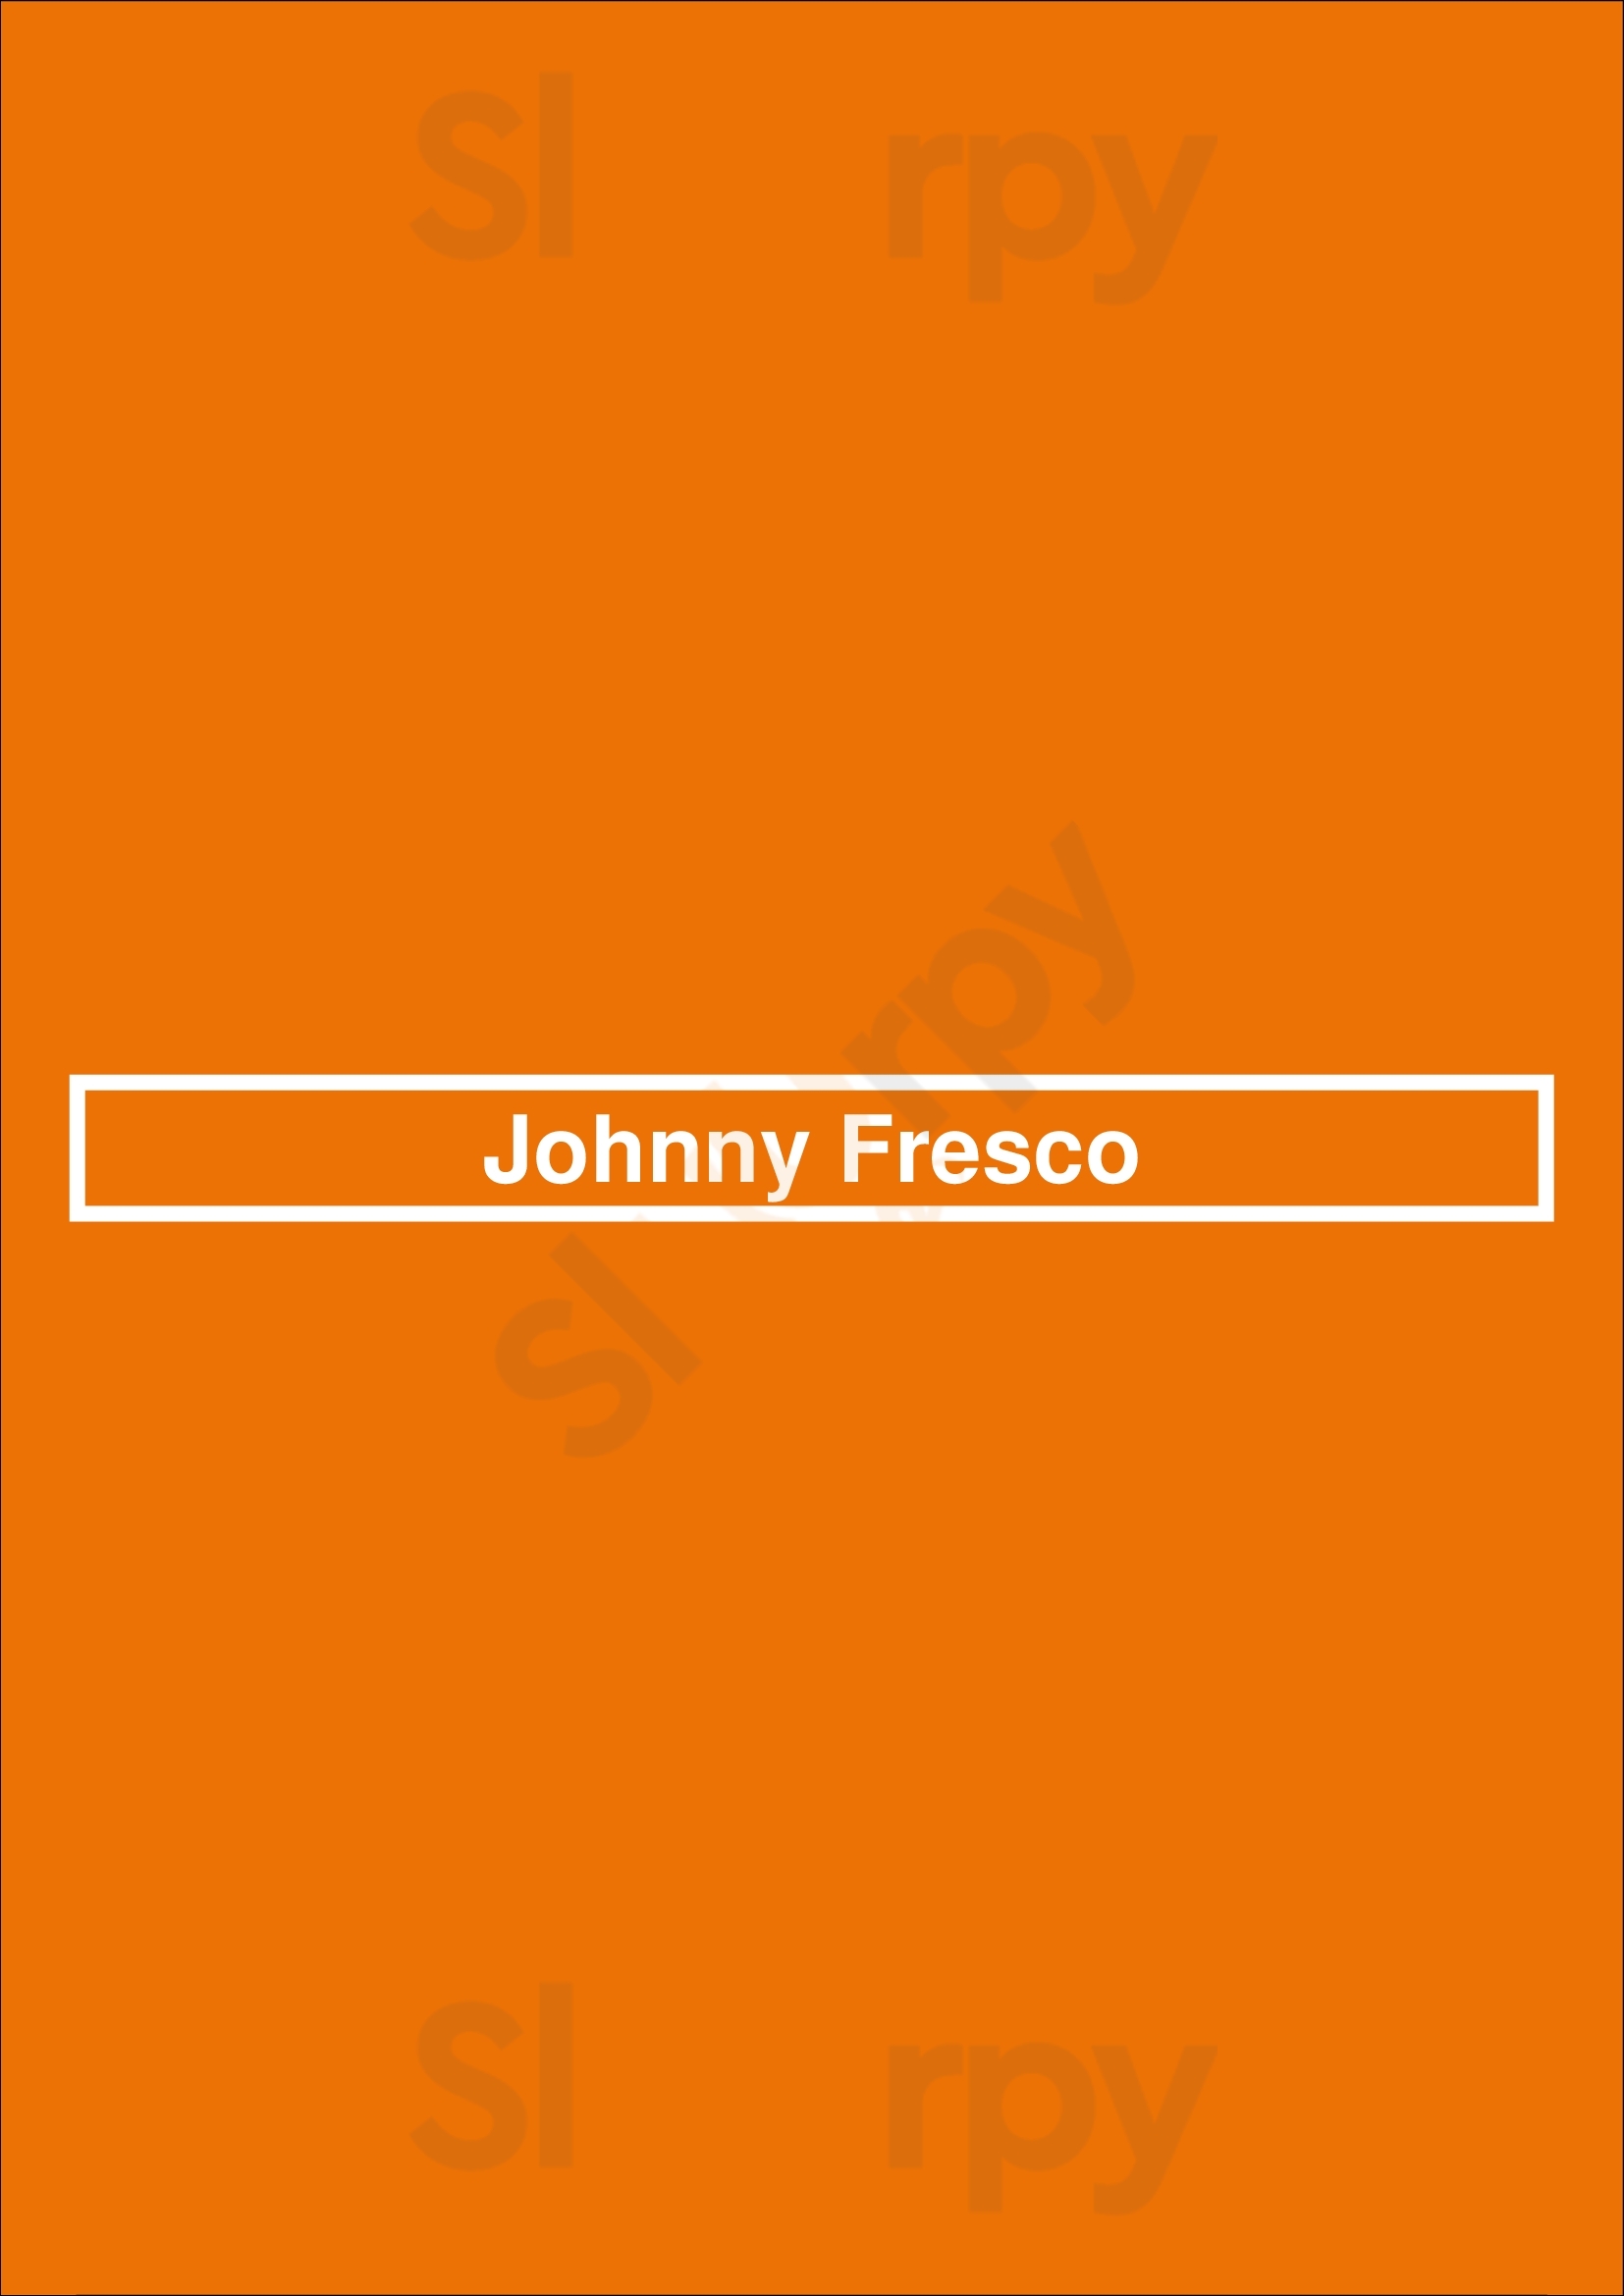 Johnny Fresco Waterloo Menu - 1